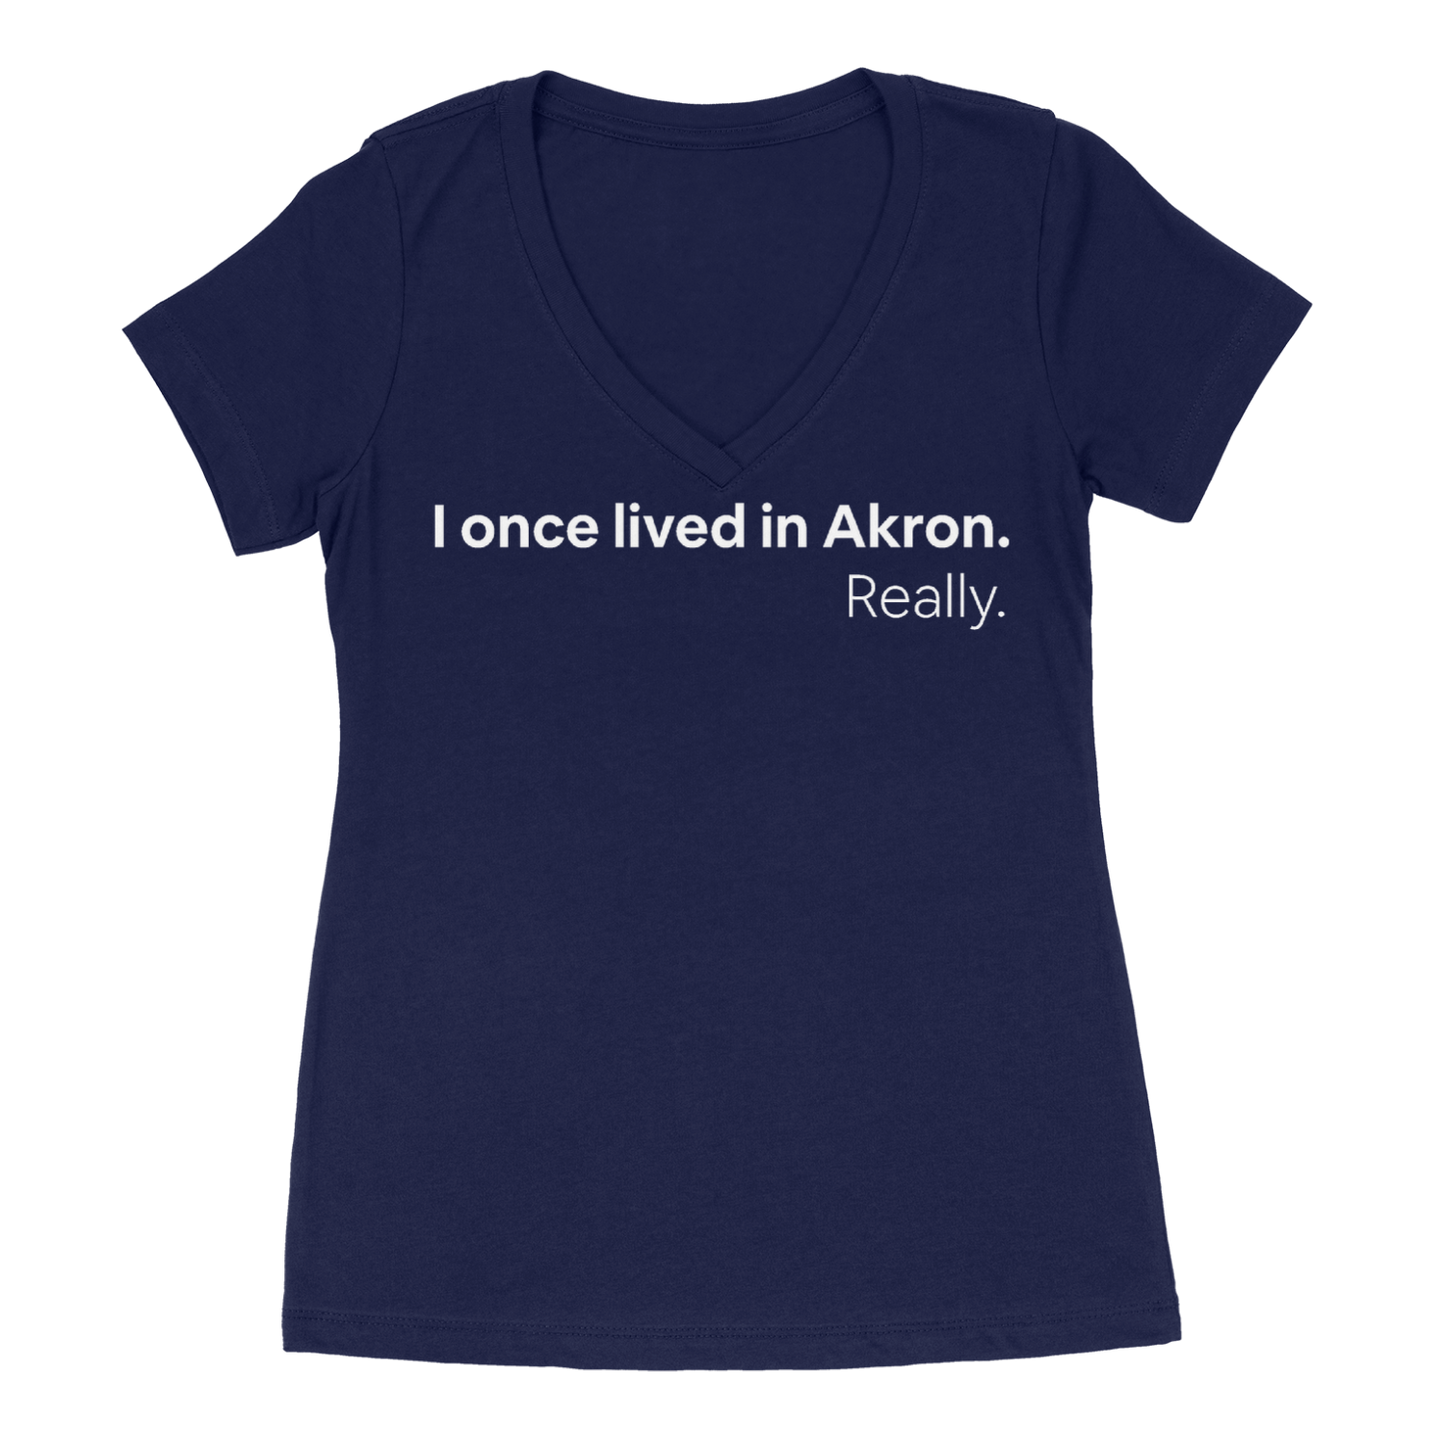 Really - Akron